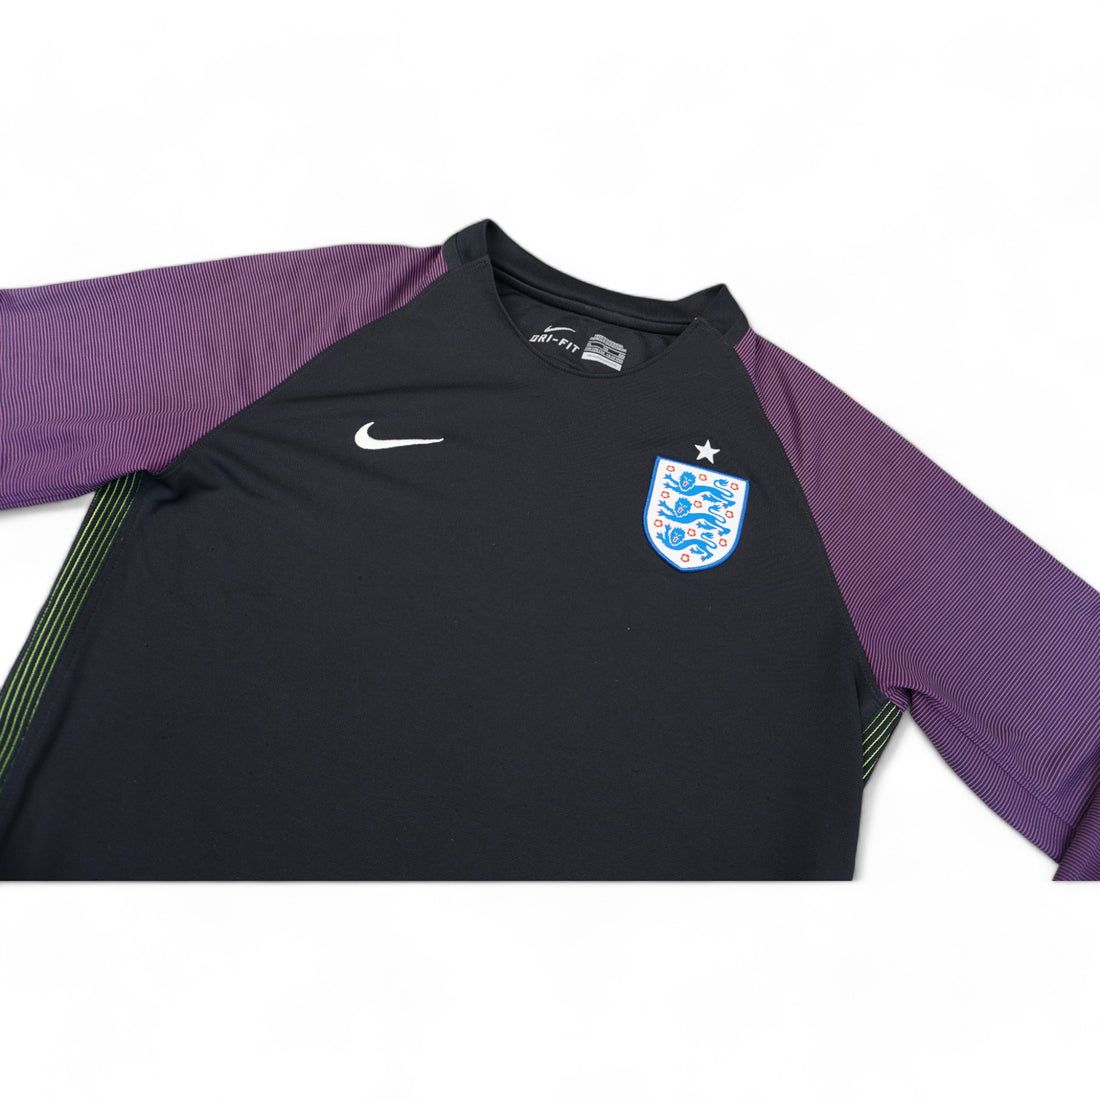 Nike Vintage England Sweatshirt (S)